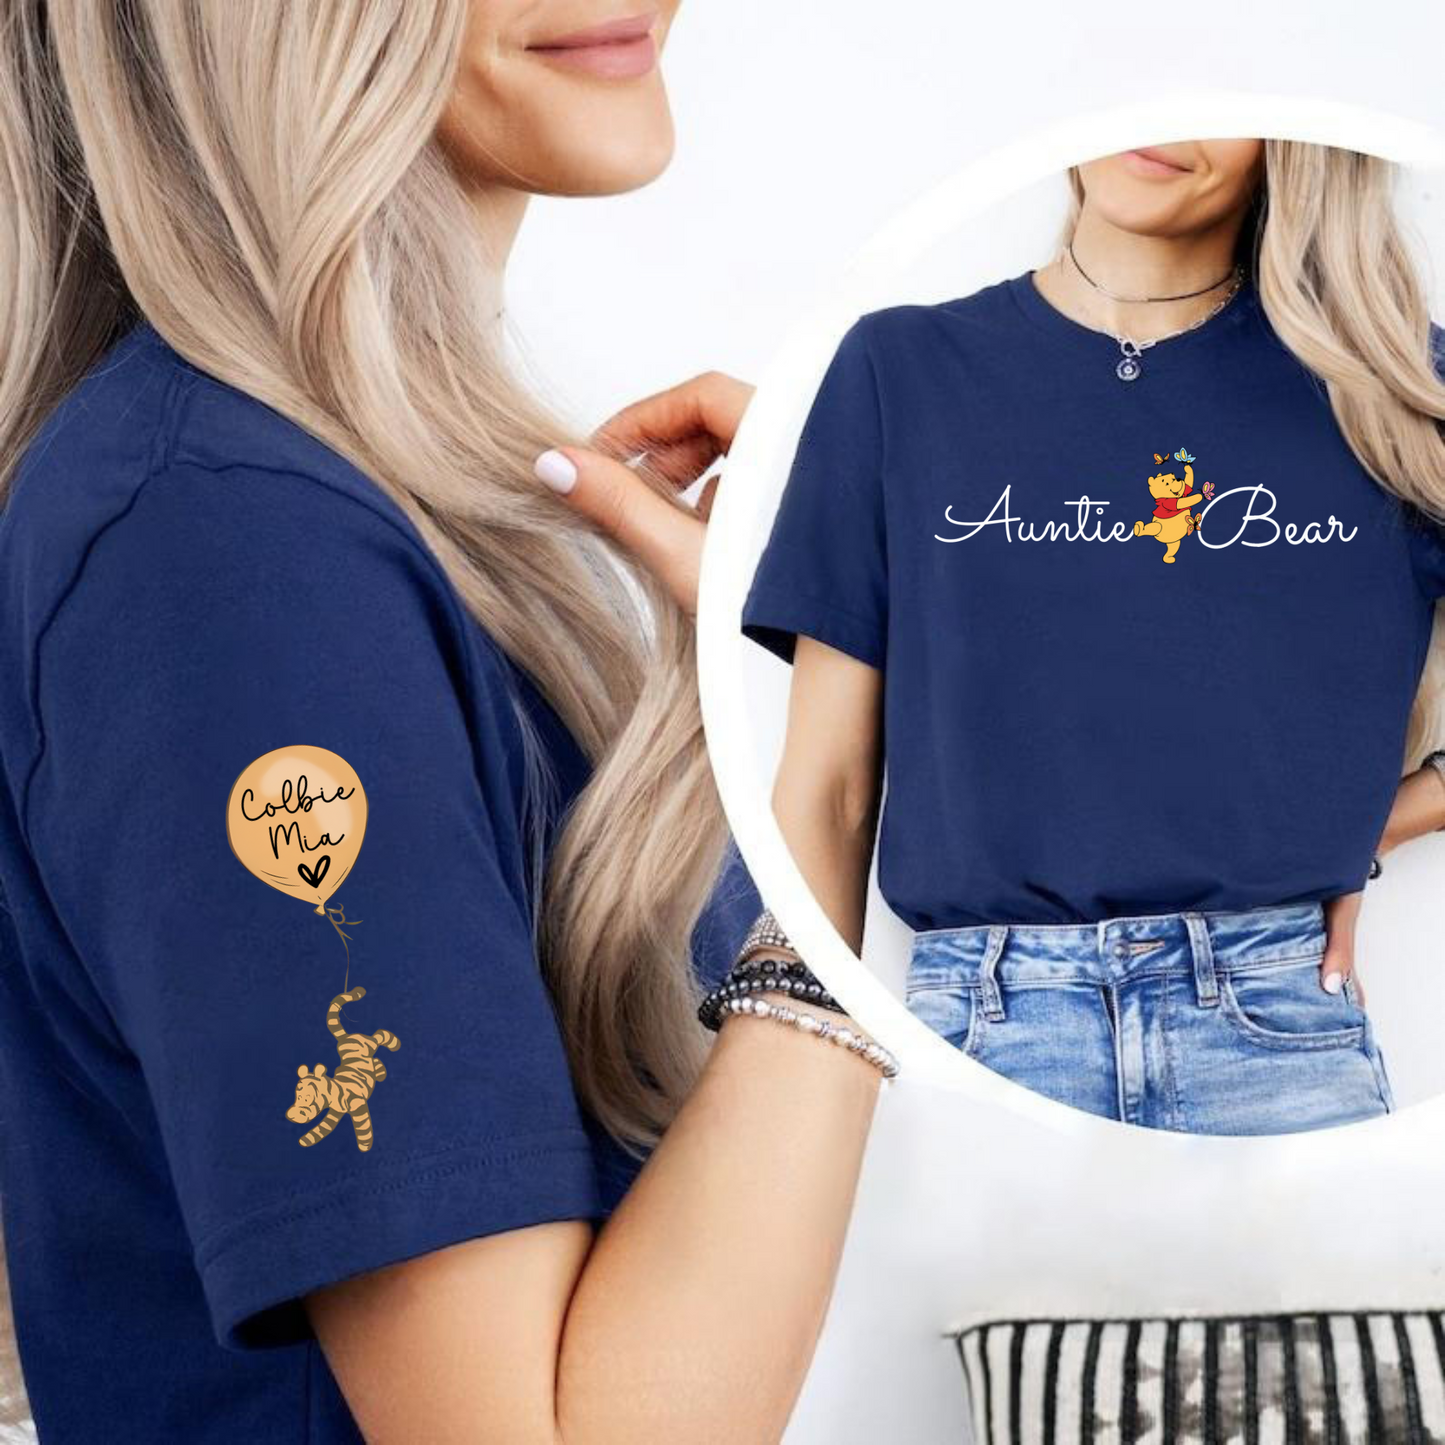 "Tante-Bär" Personalisiertes T-Shirt - Ideal als Geschenk